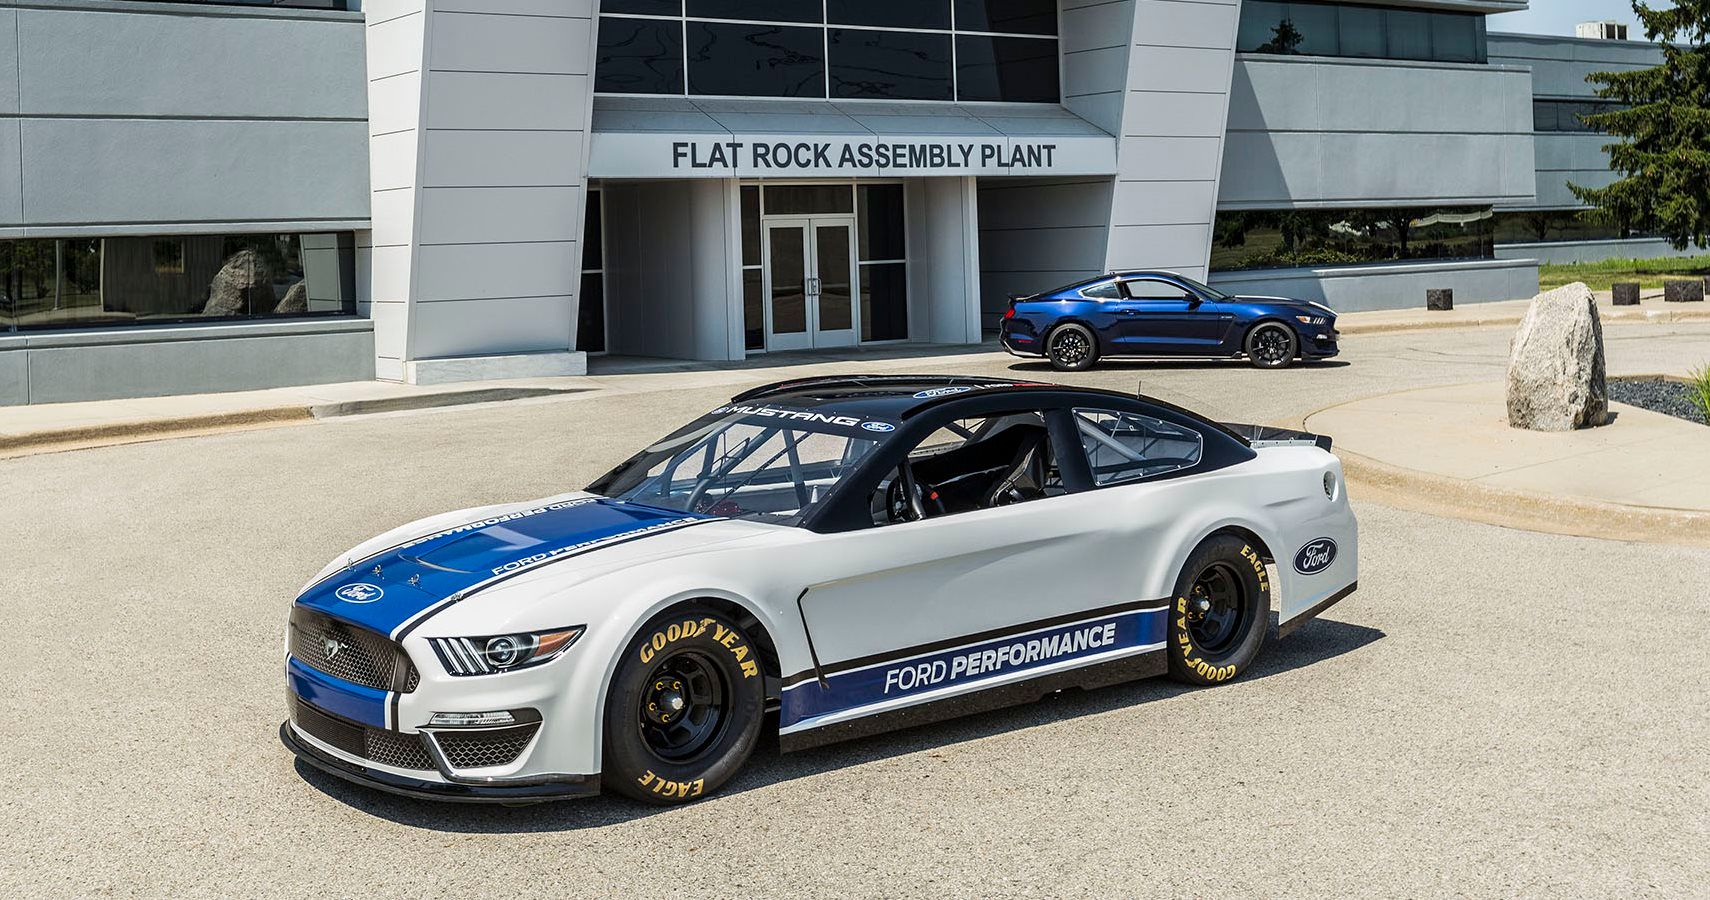 Ford Reveals Their Monster Energy NASCAR Race Car